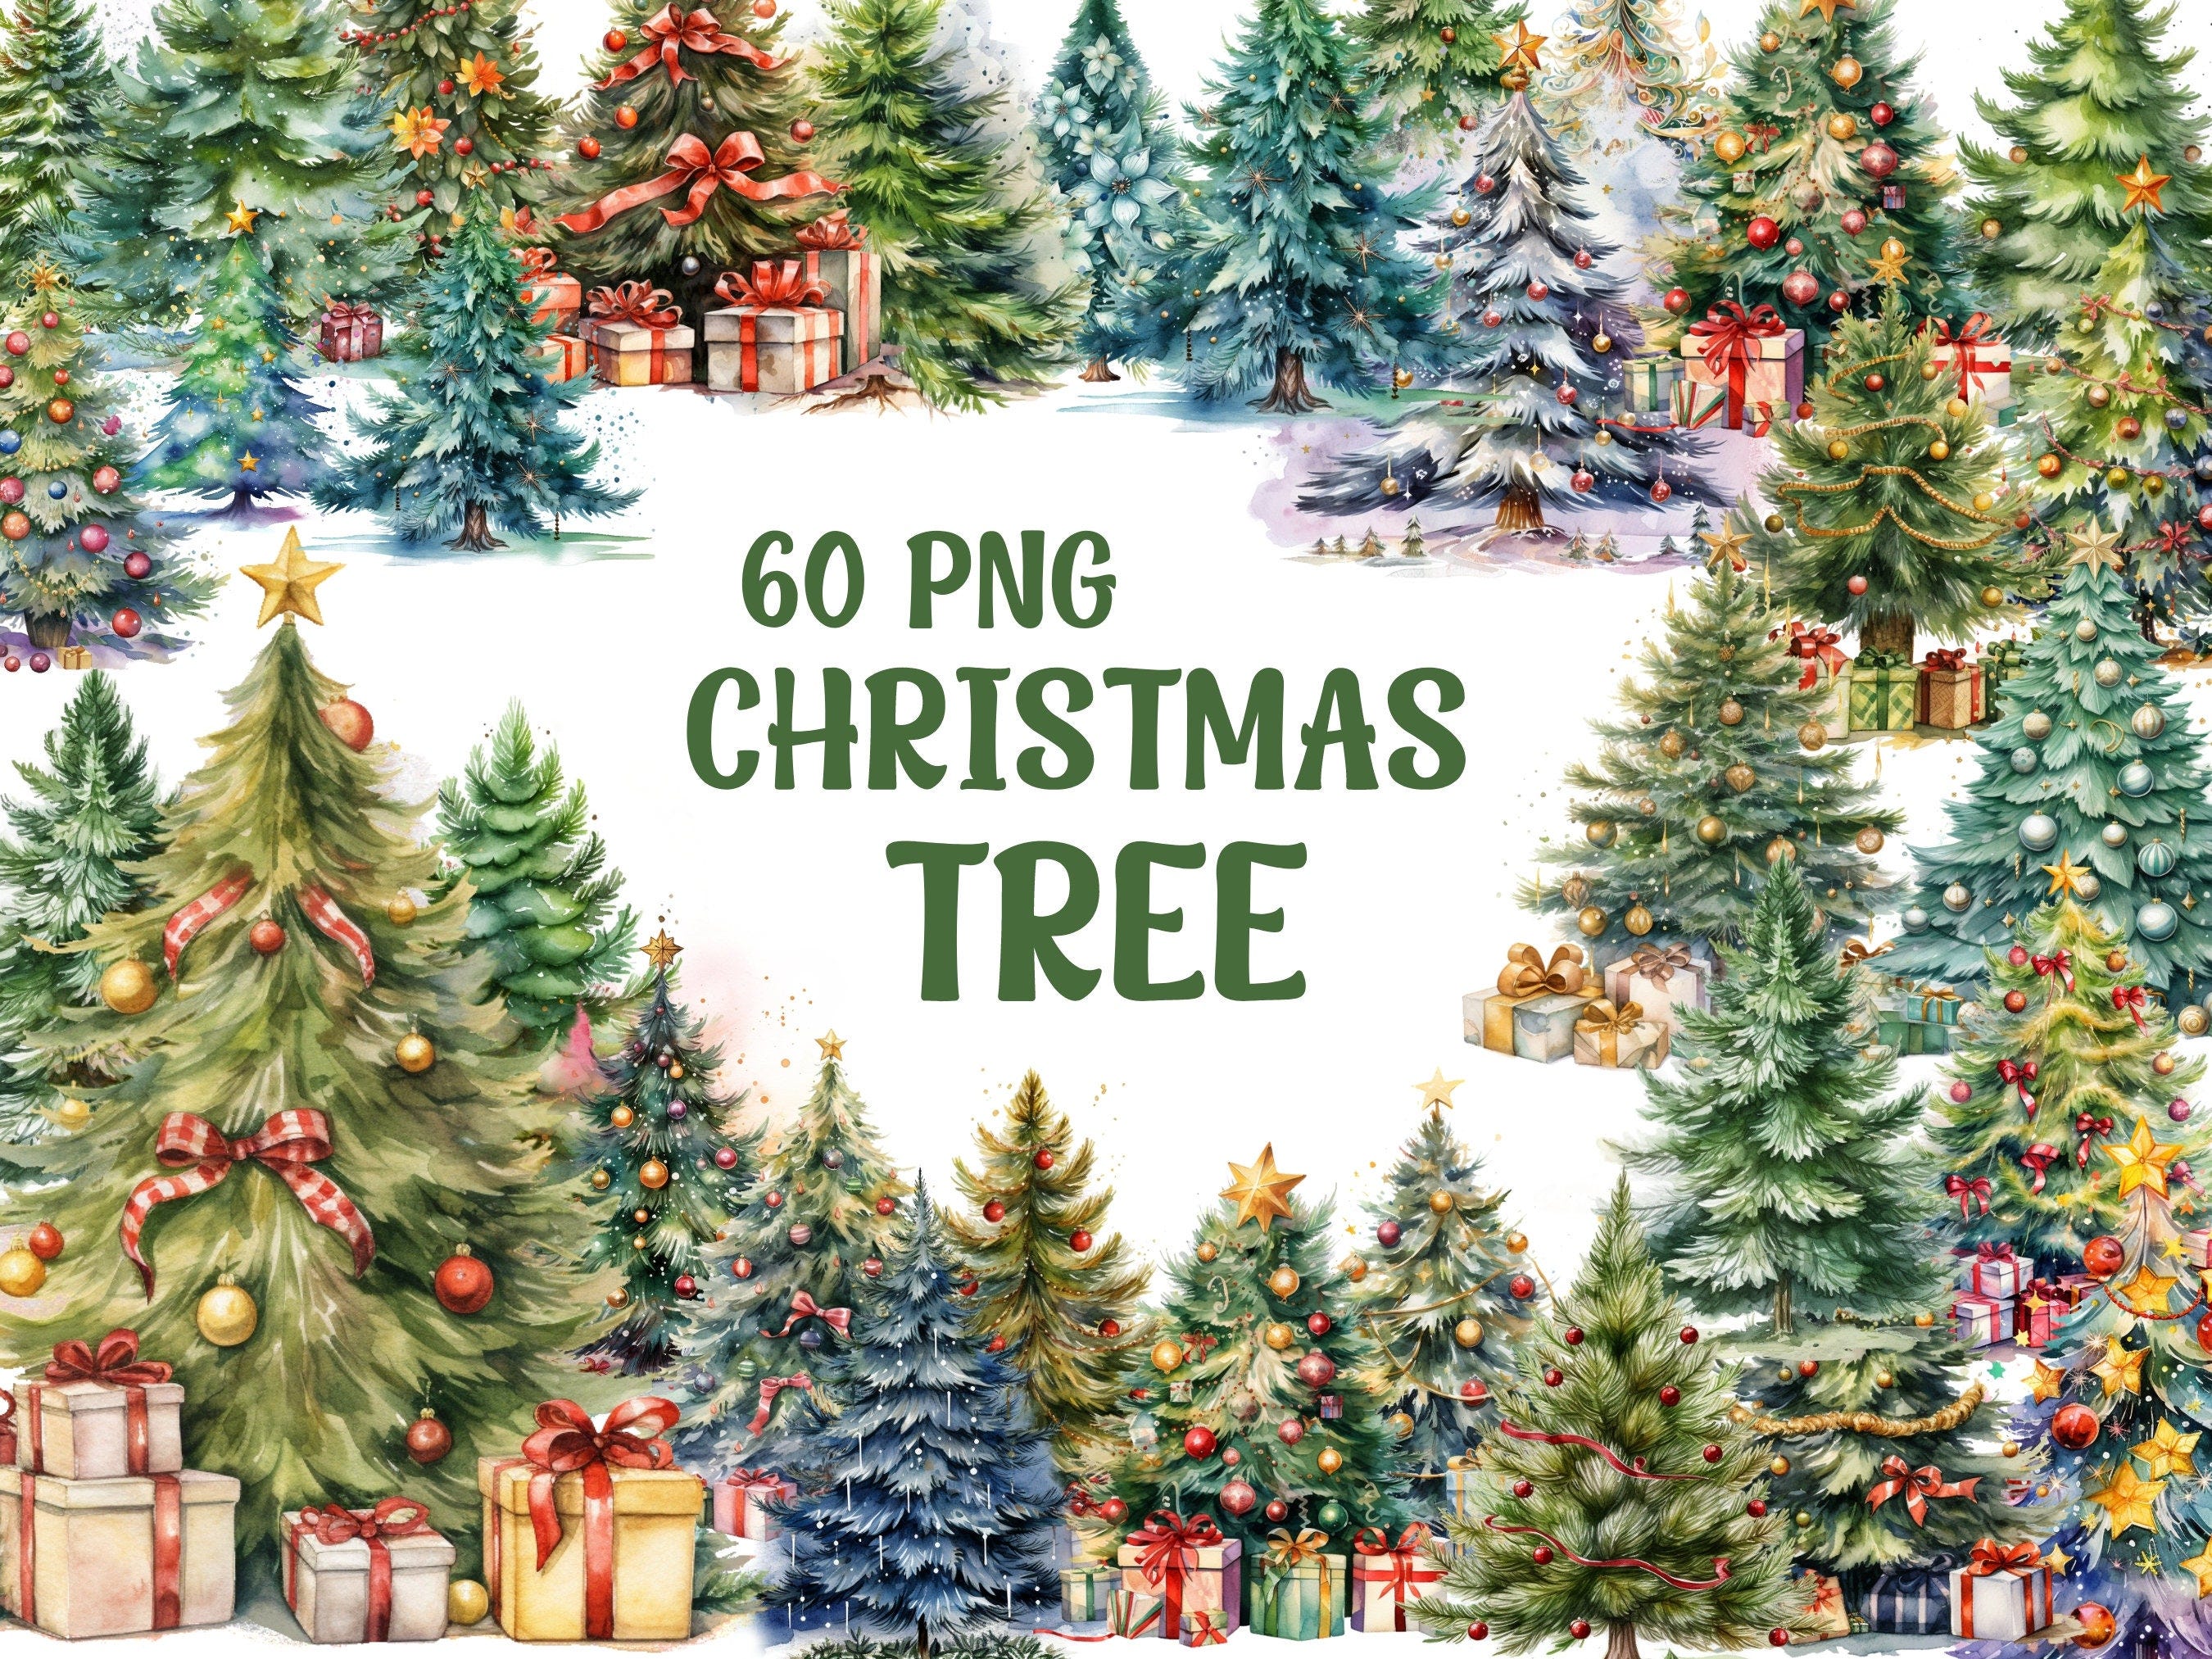 Watercolor Christmas Tree Clipart, Christmas Tree Png, Christmas Decor, Transparent Background, Premium Quality, 60 Png Christmas Tree Bundl